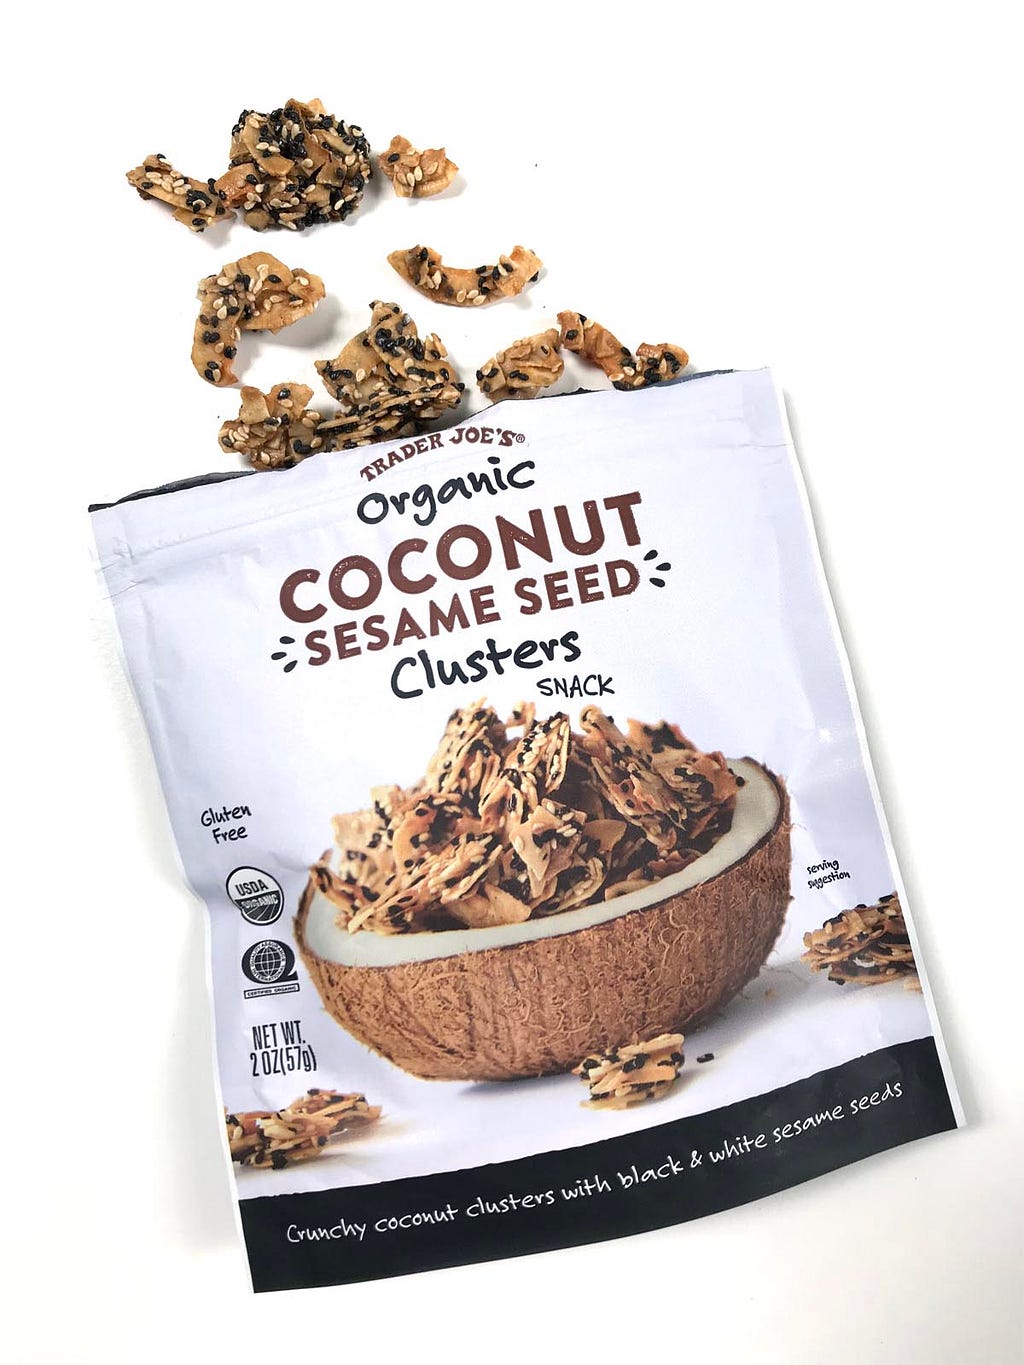 trader joe's paleo snack bag of organic coconut sesame seed clusters